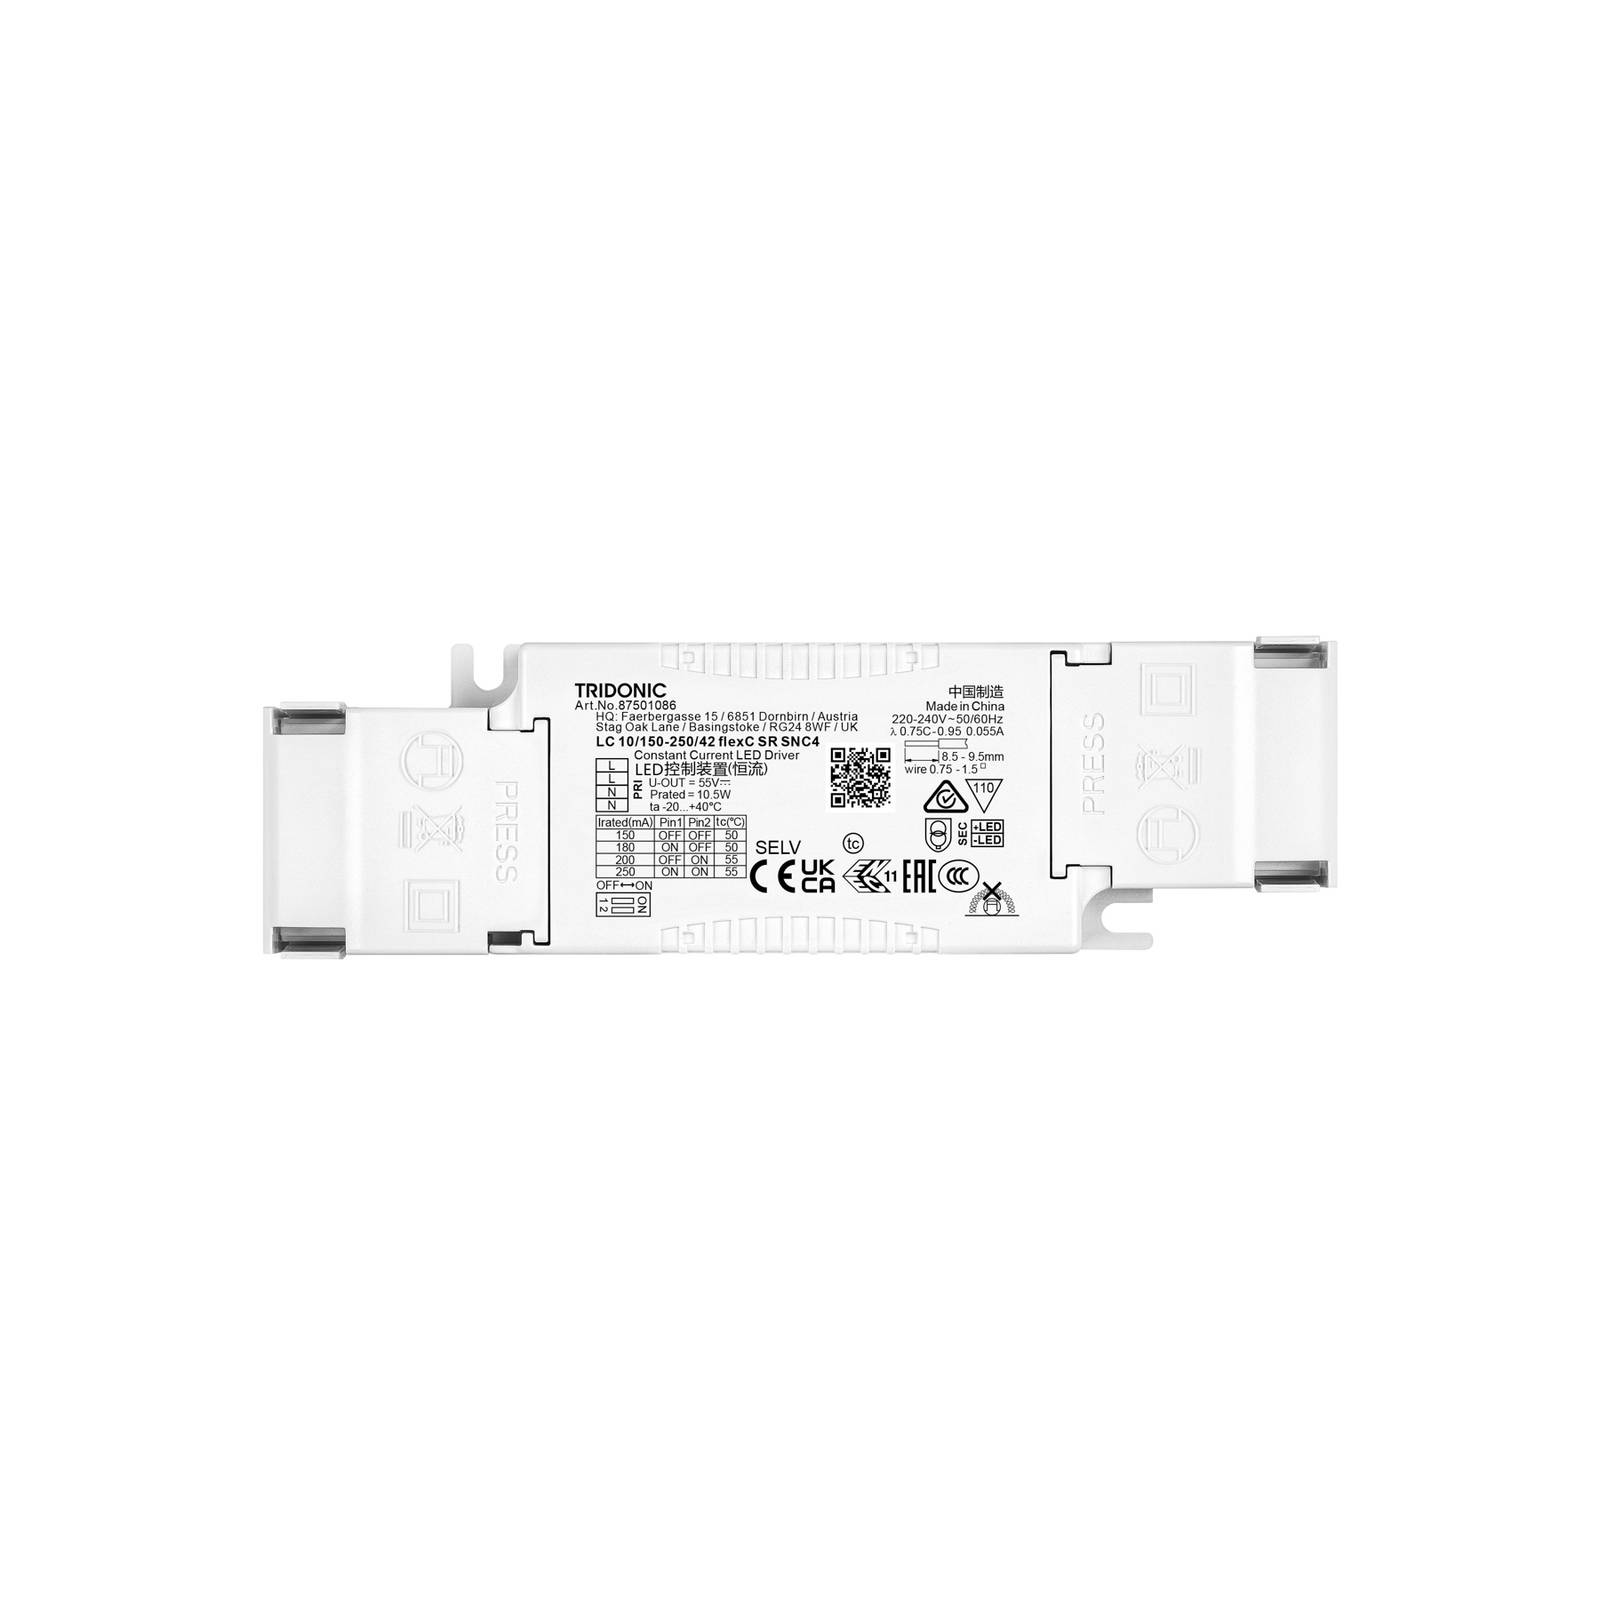 TRIDONIC LED kompakt driver LC 10/150-250/42 flexC SR SNC4